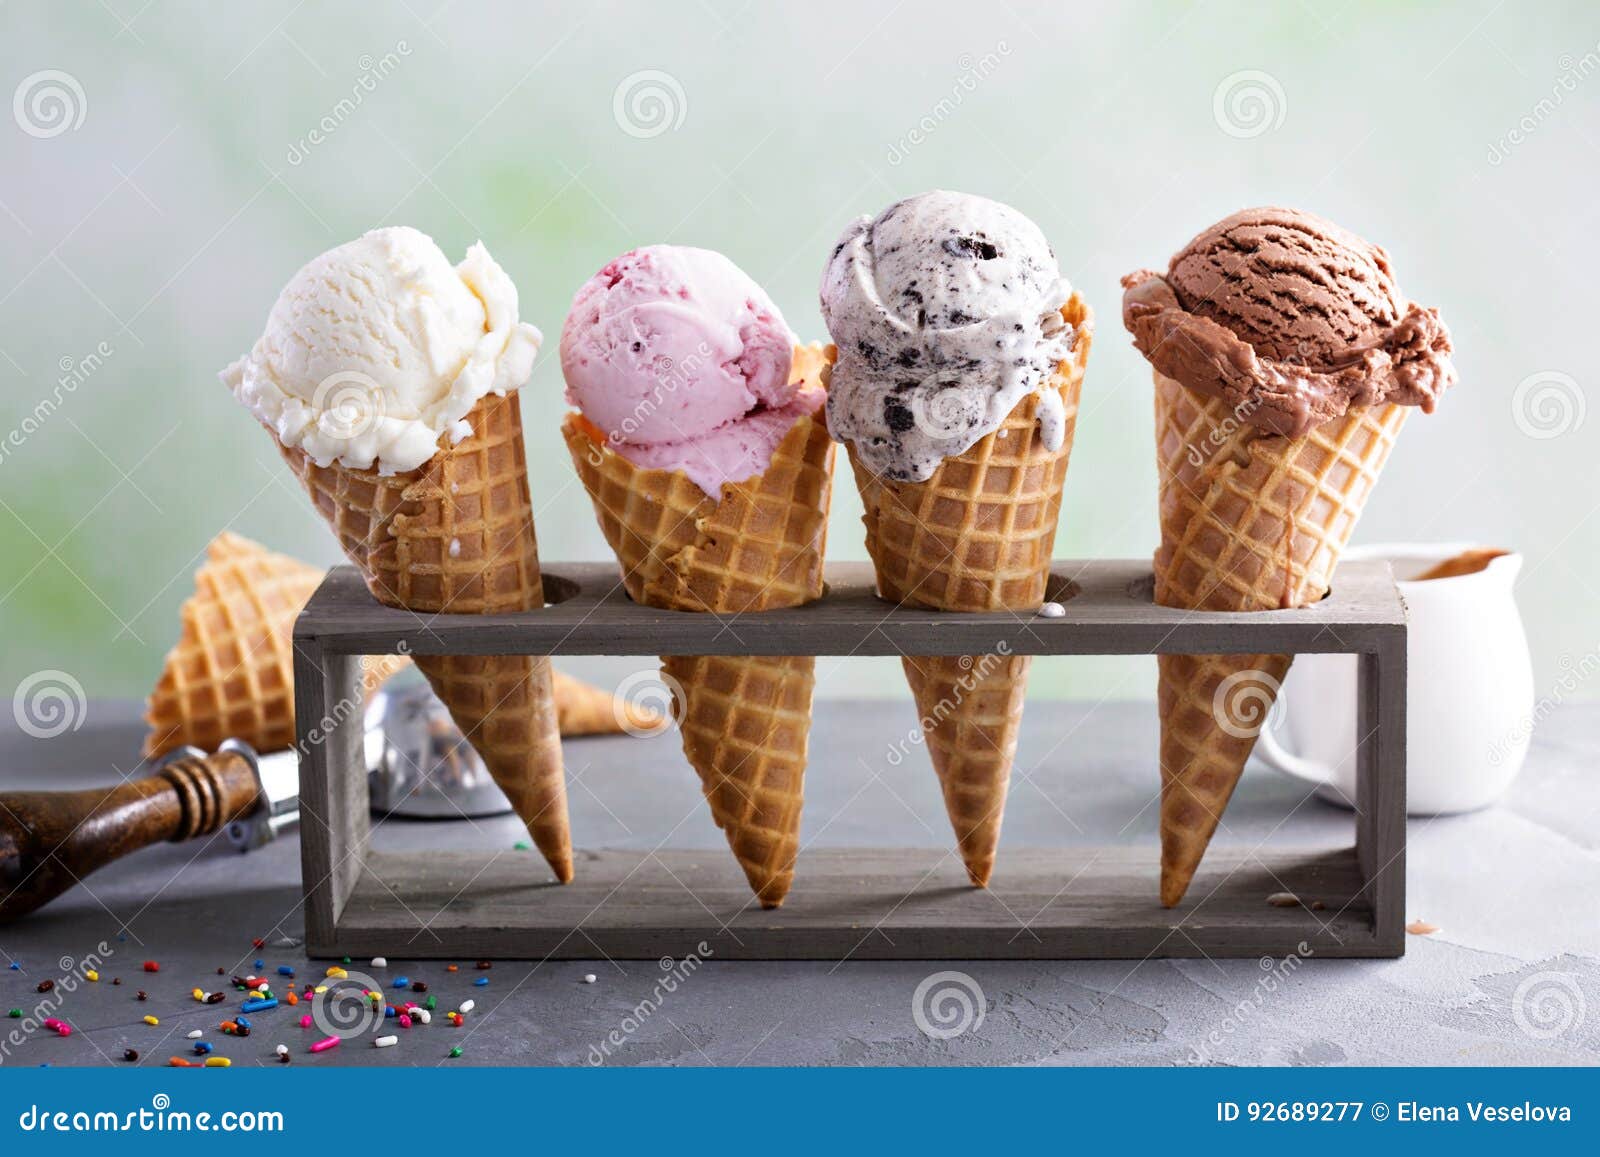 variety of ice cream cones